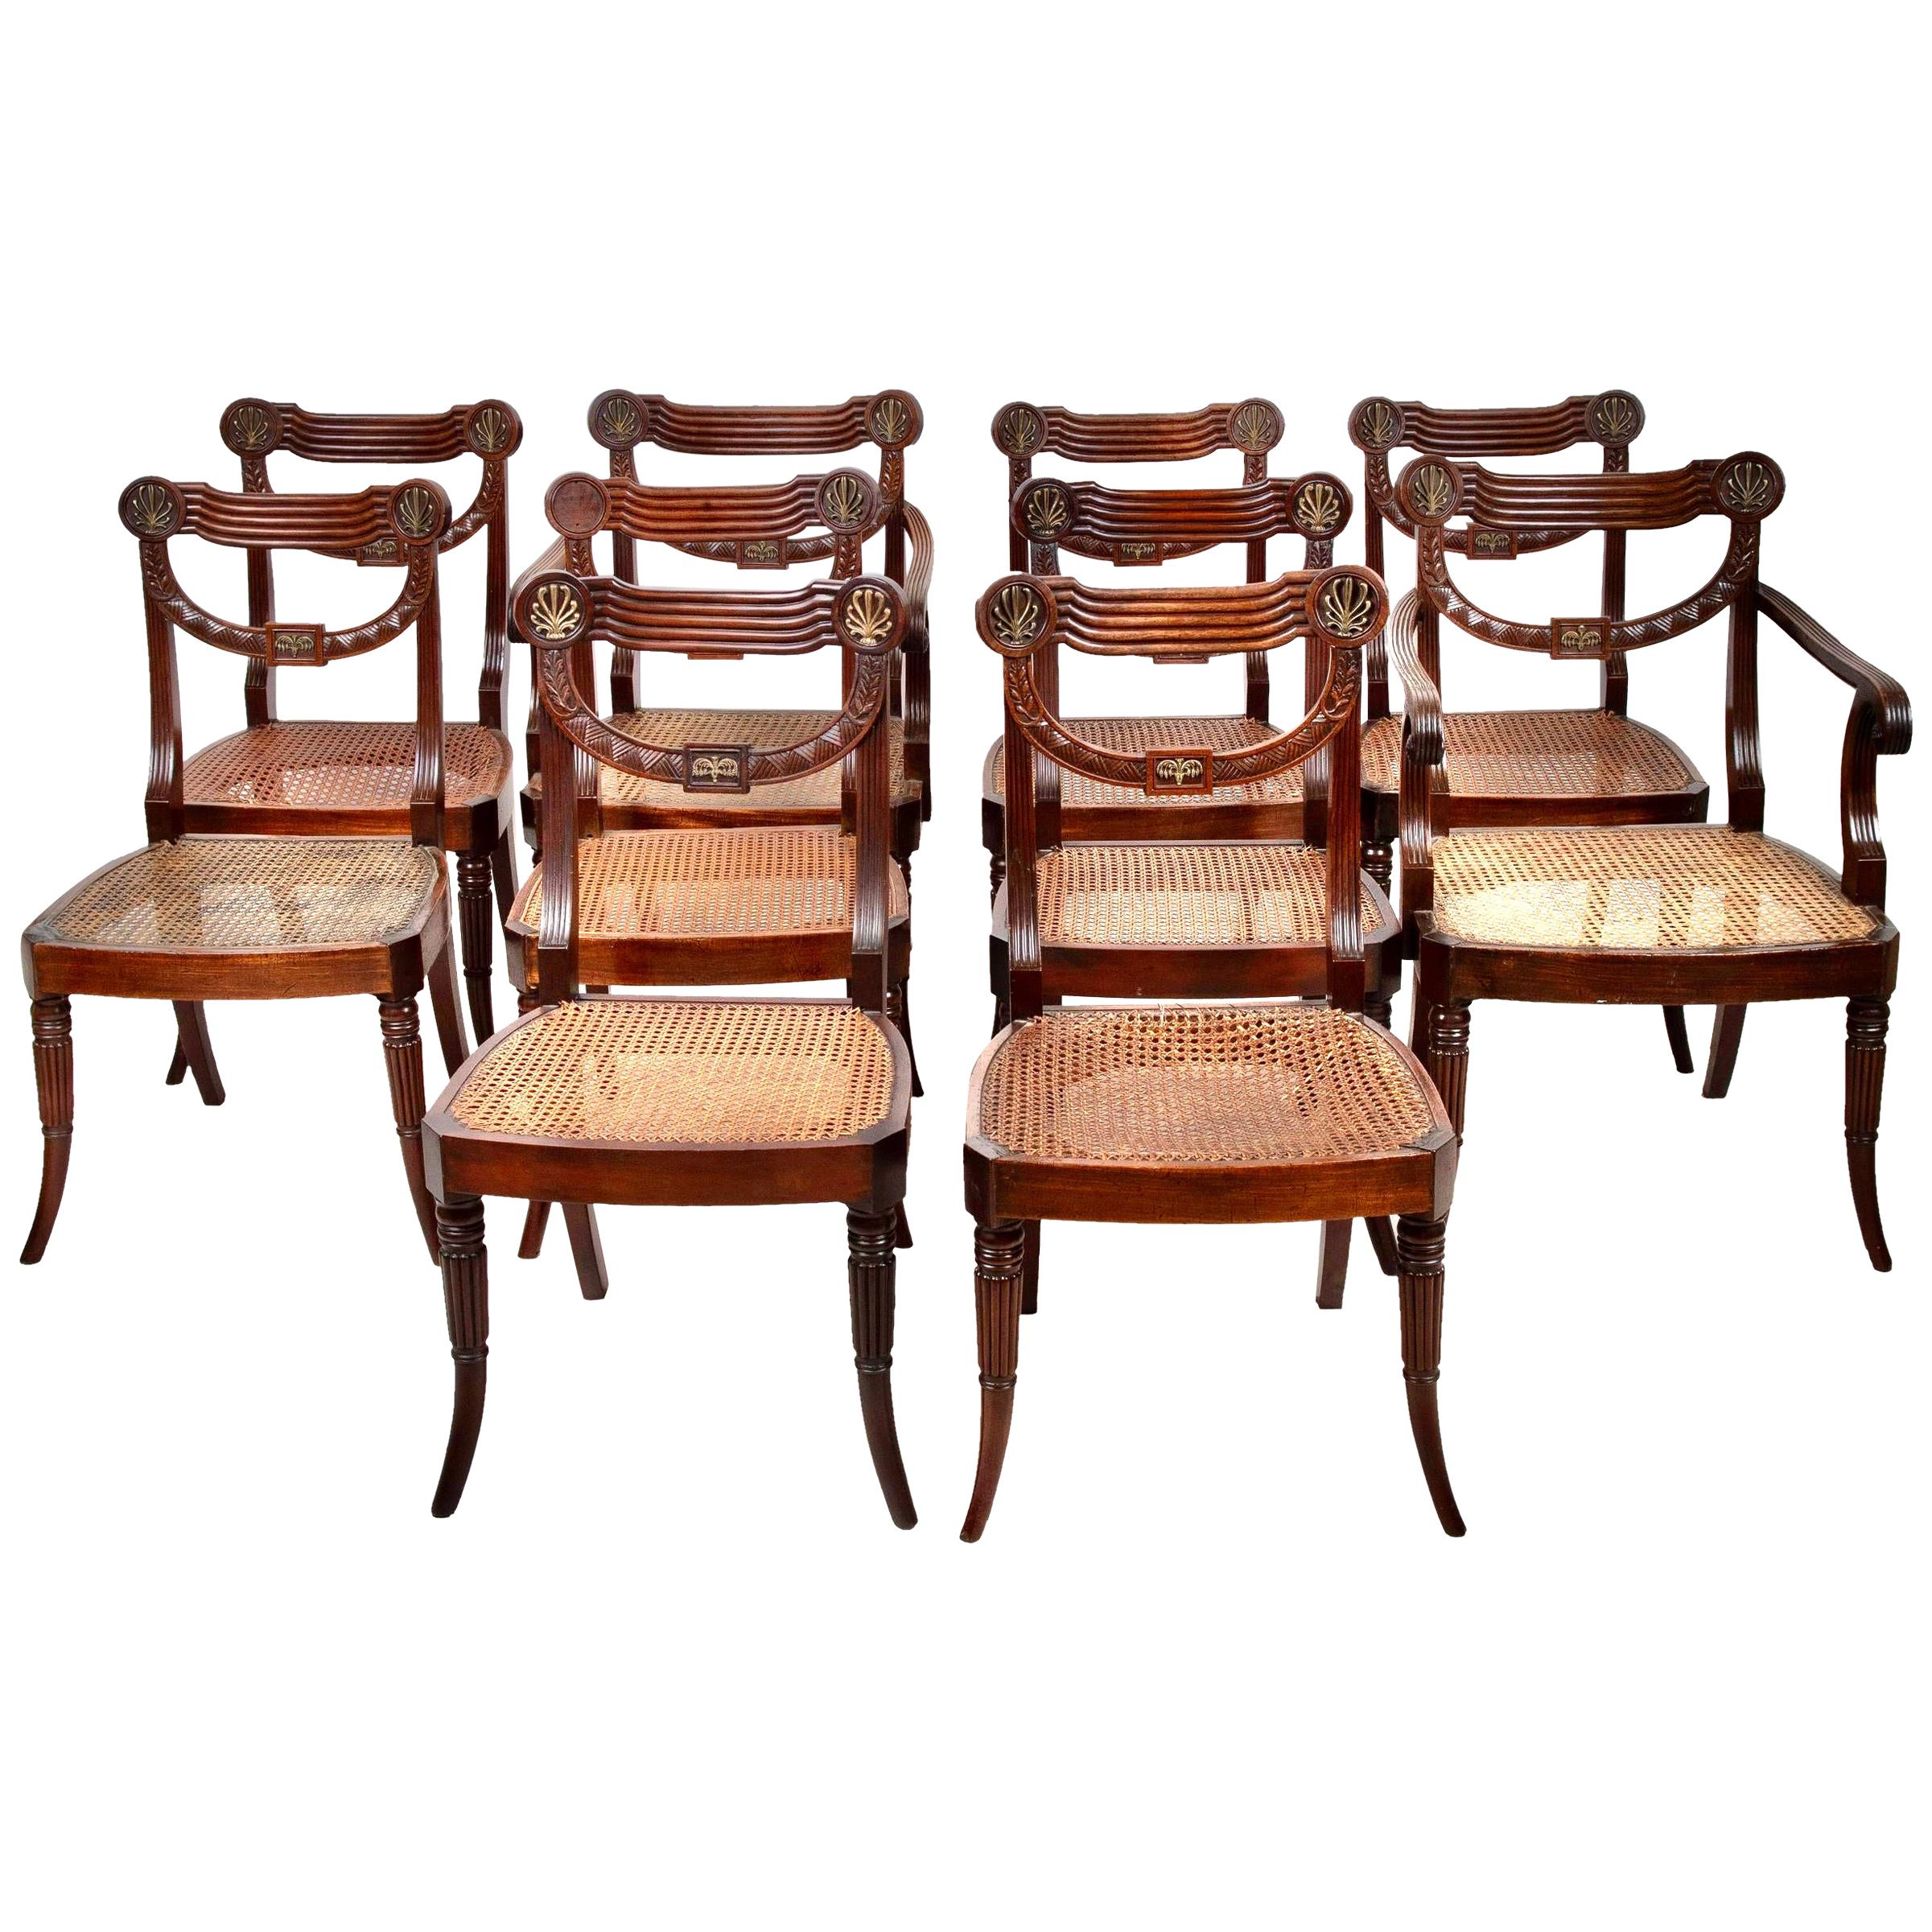 Set of Ten 19th Century Regency Mahogany Dining Chairs